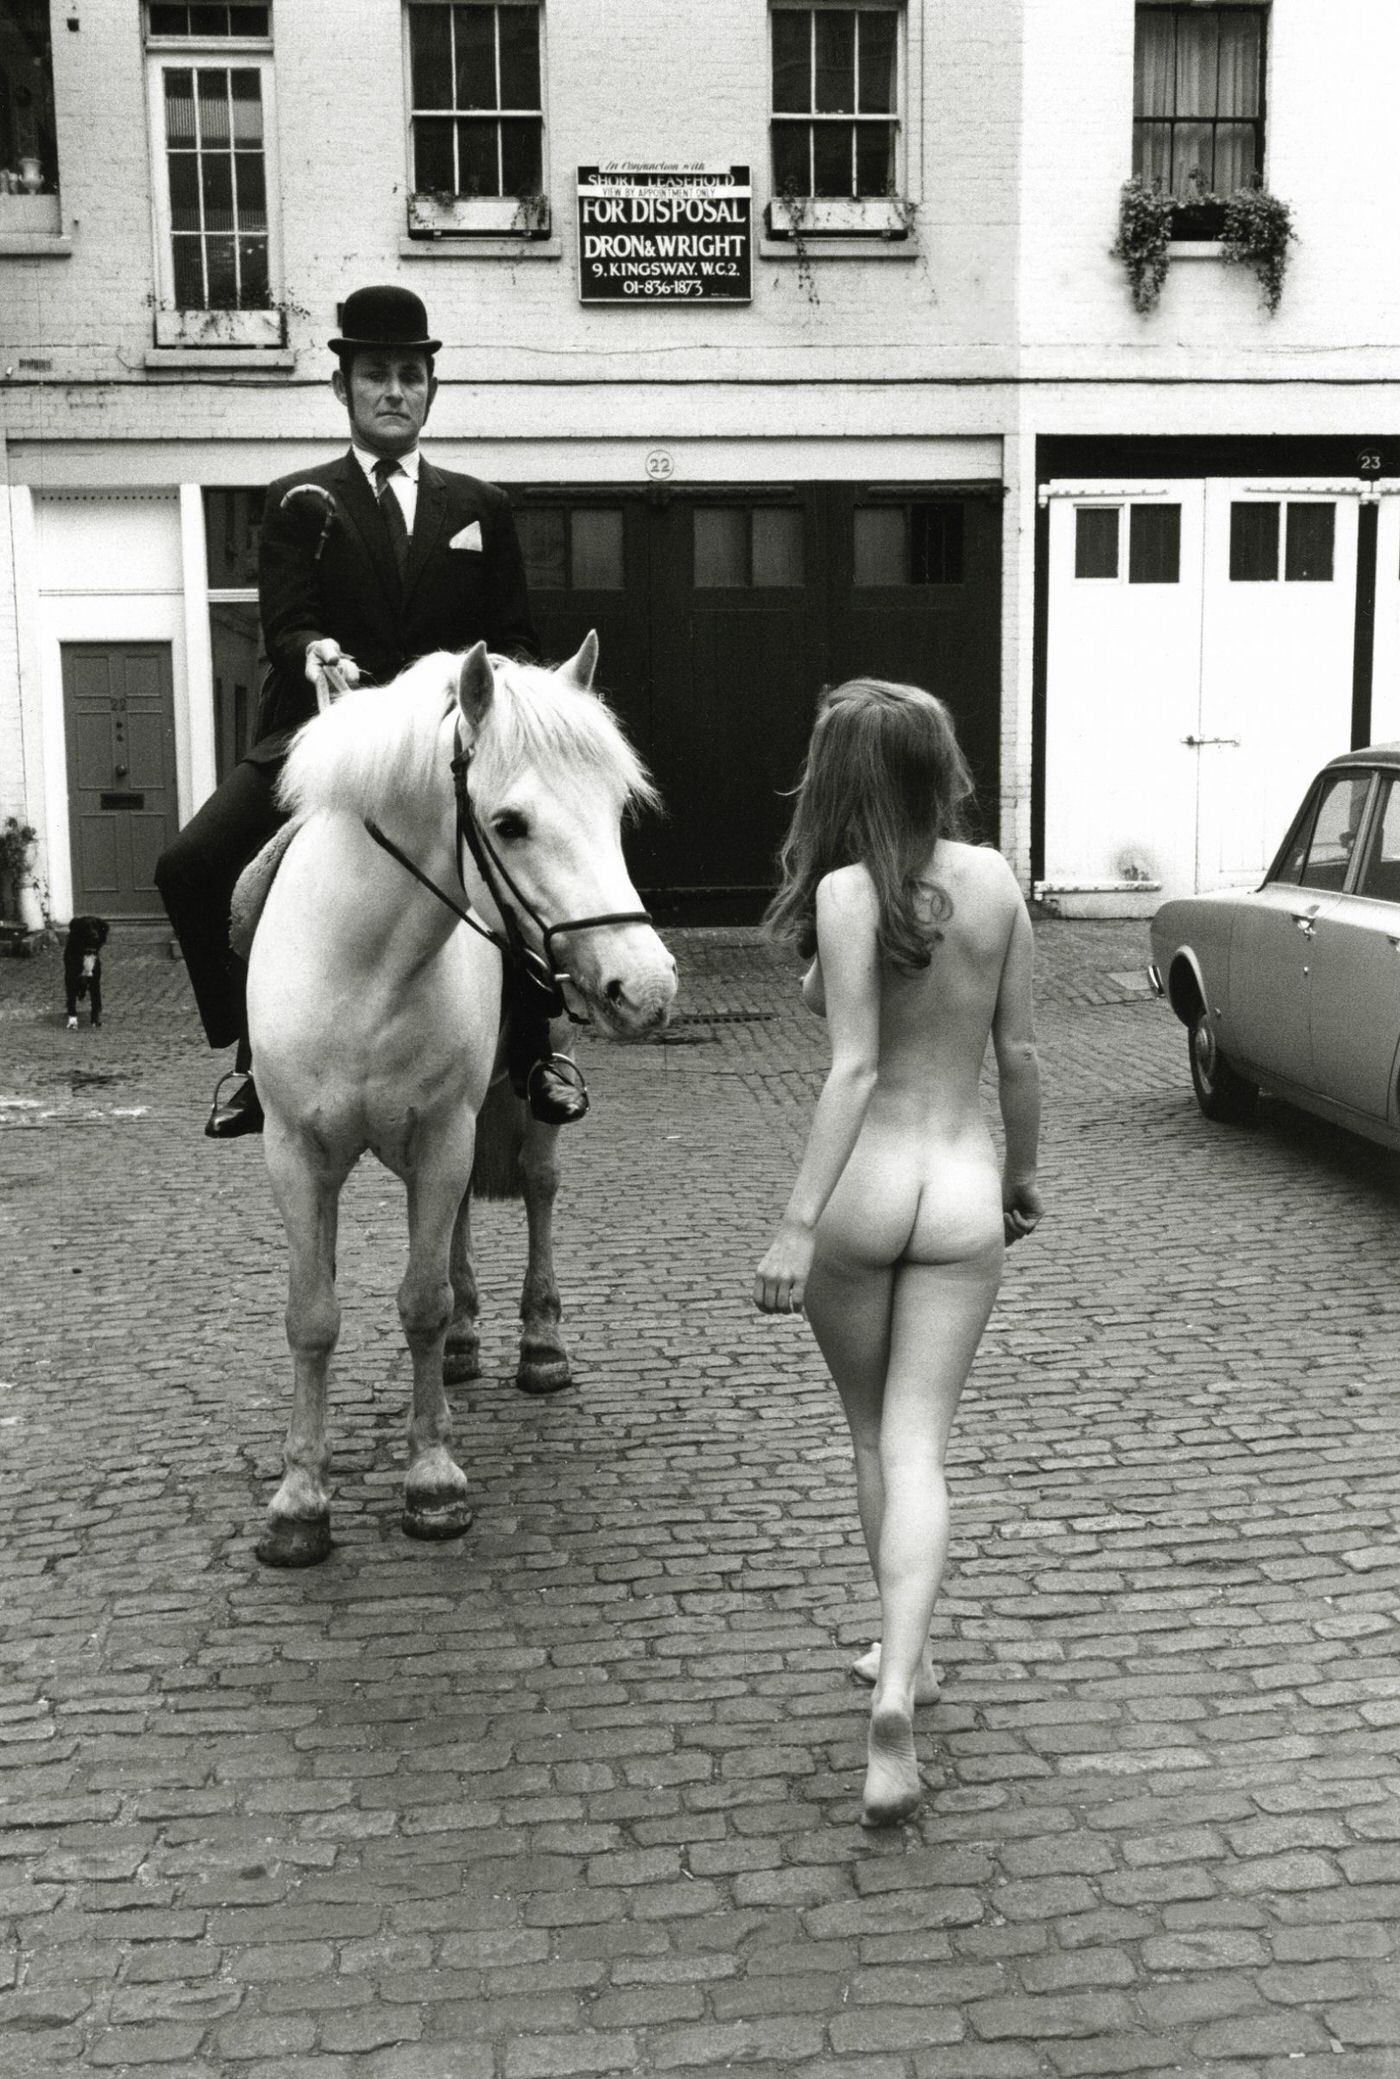 The 1960s Swinging London through the Lens of Frank Habicht